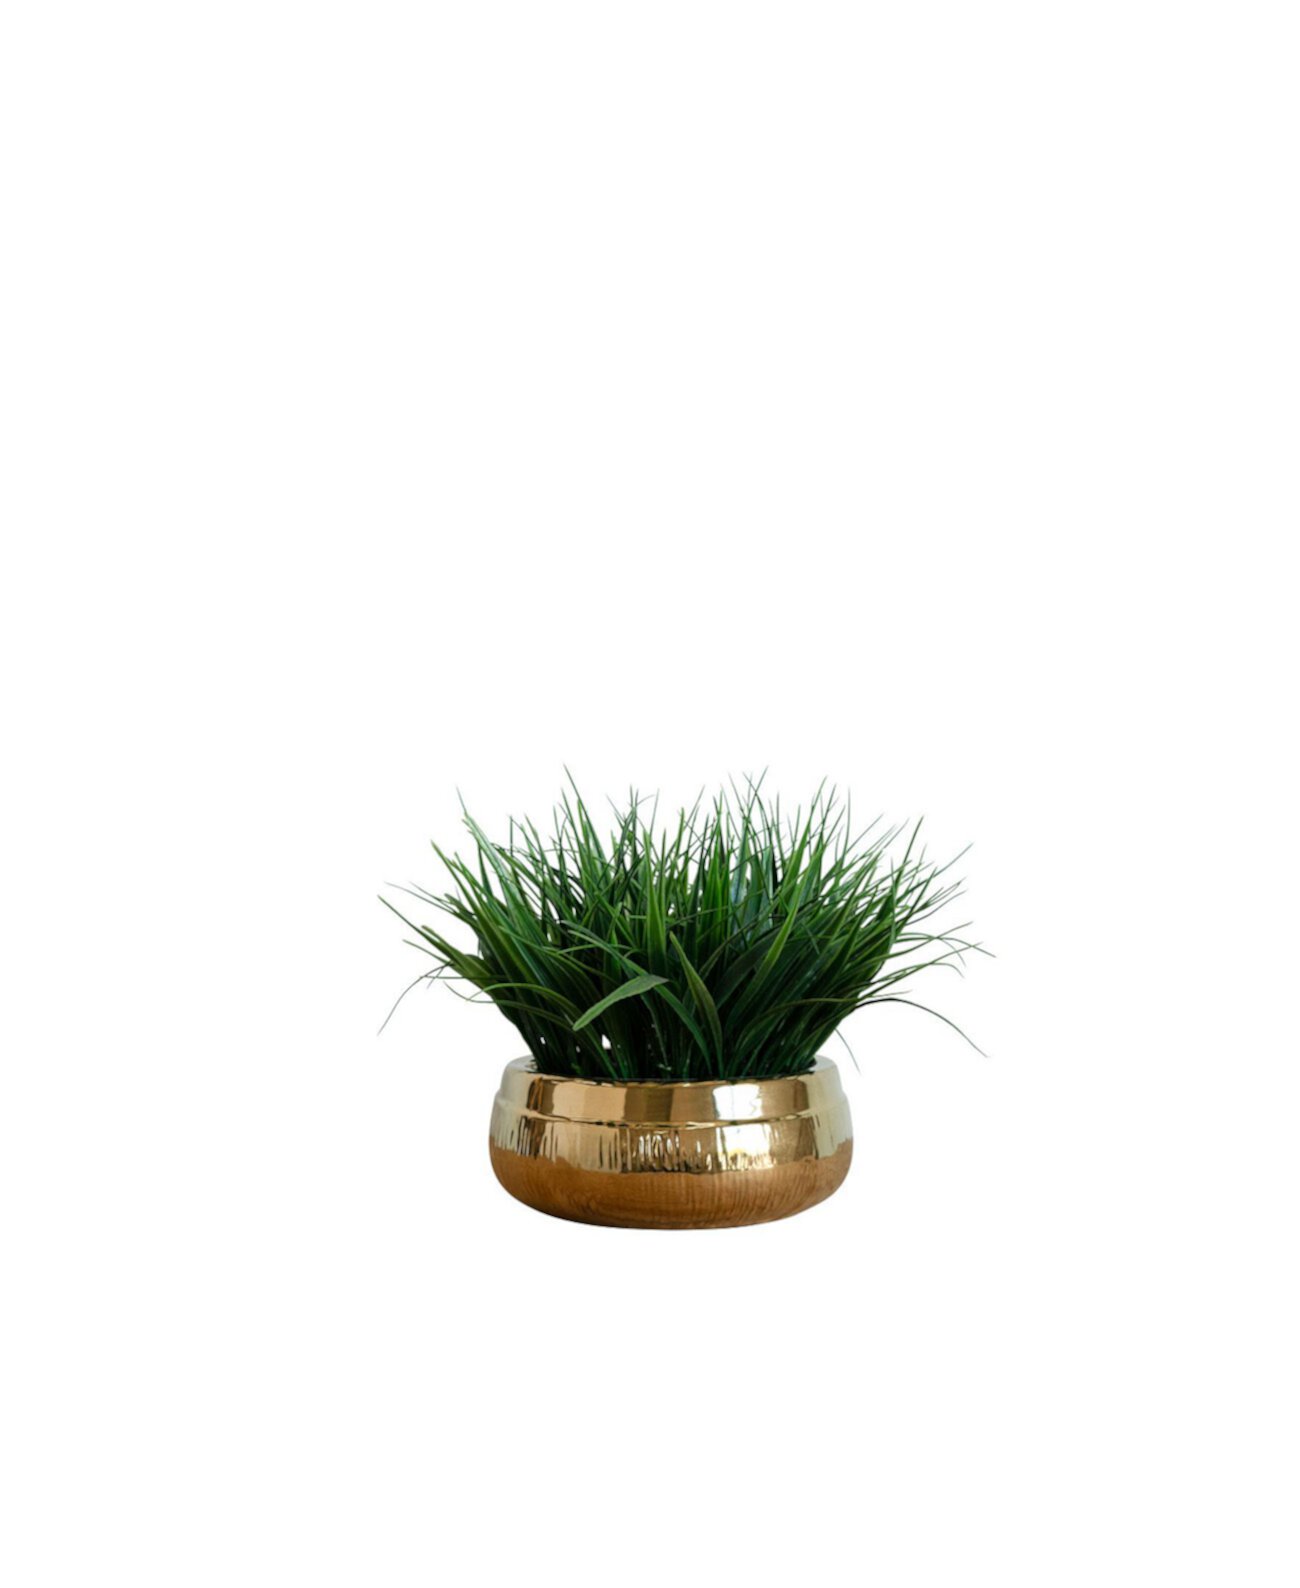 Desktop Artificial Grass Bowl in Decorative Pot, 9" Nature's Elements